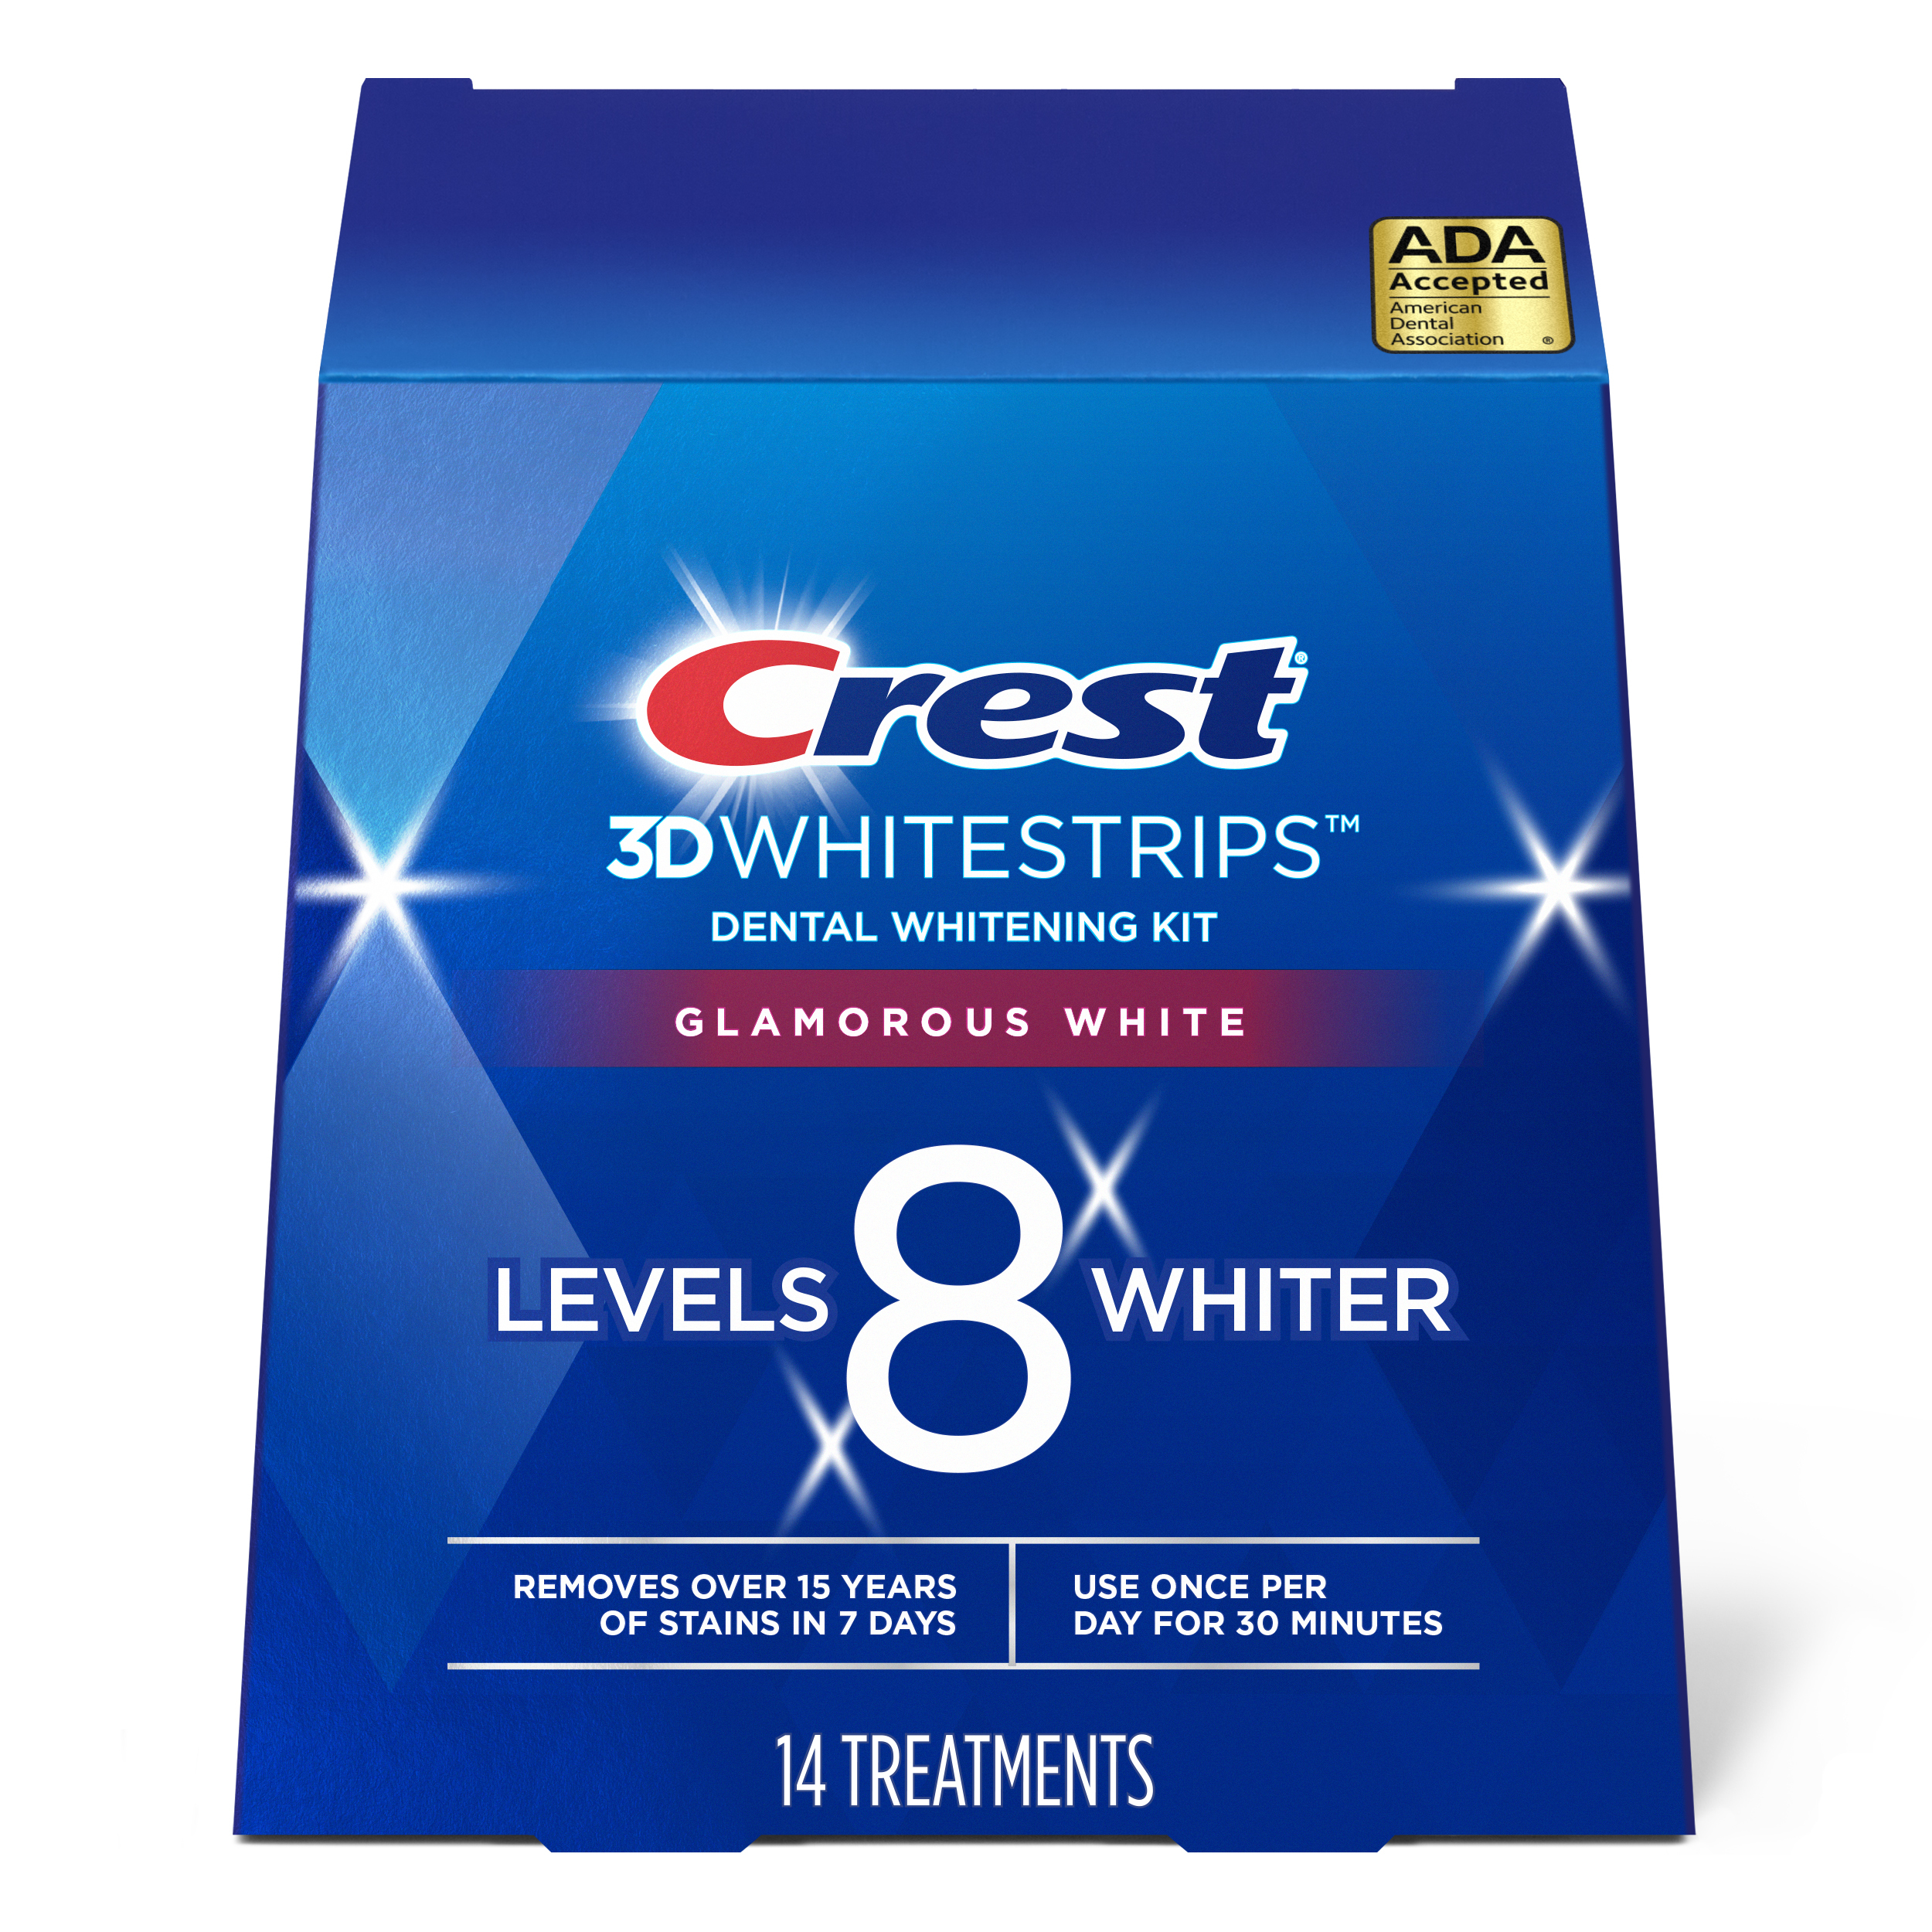 Crest 3D Whitestrips Glamorous White At-Home Teeth Whitening Kit, 14 Treatments - image 1 of 8